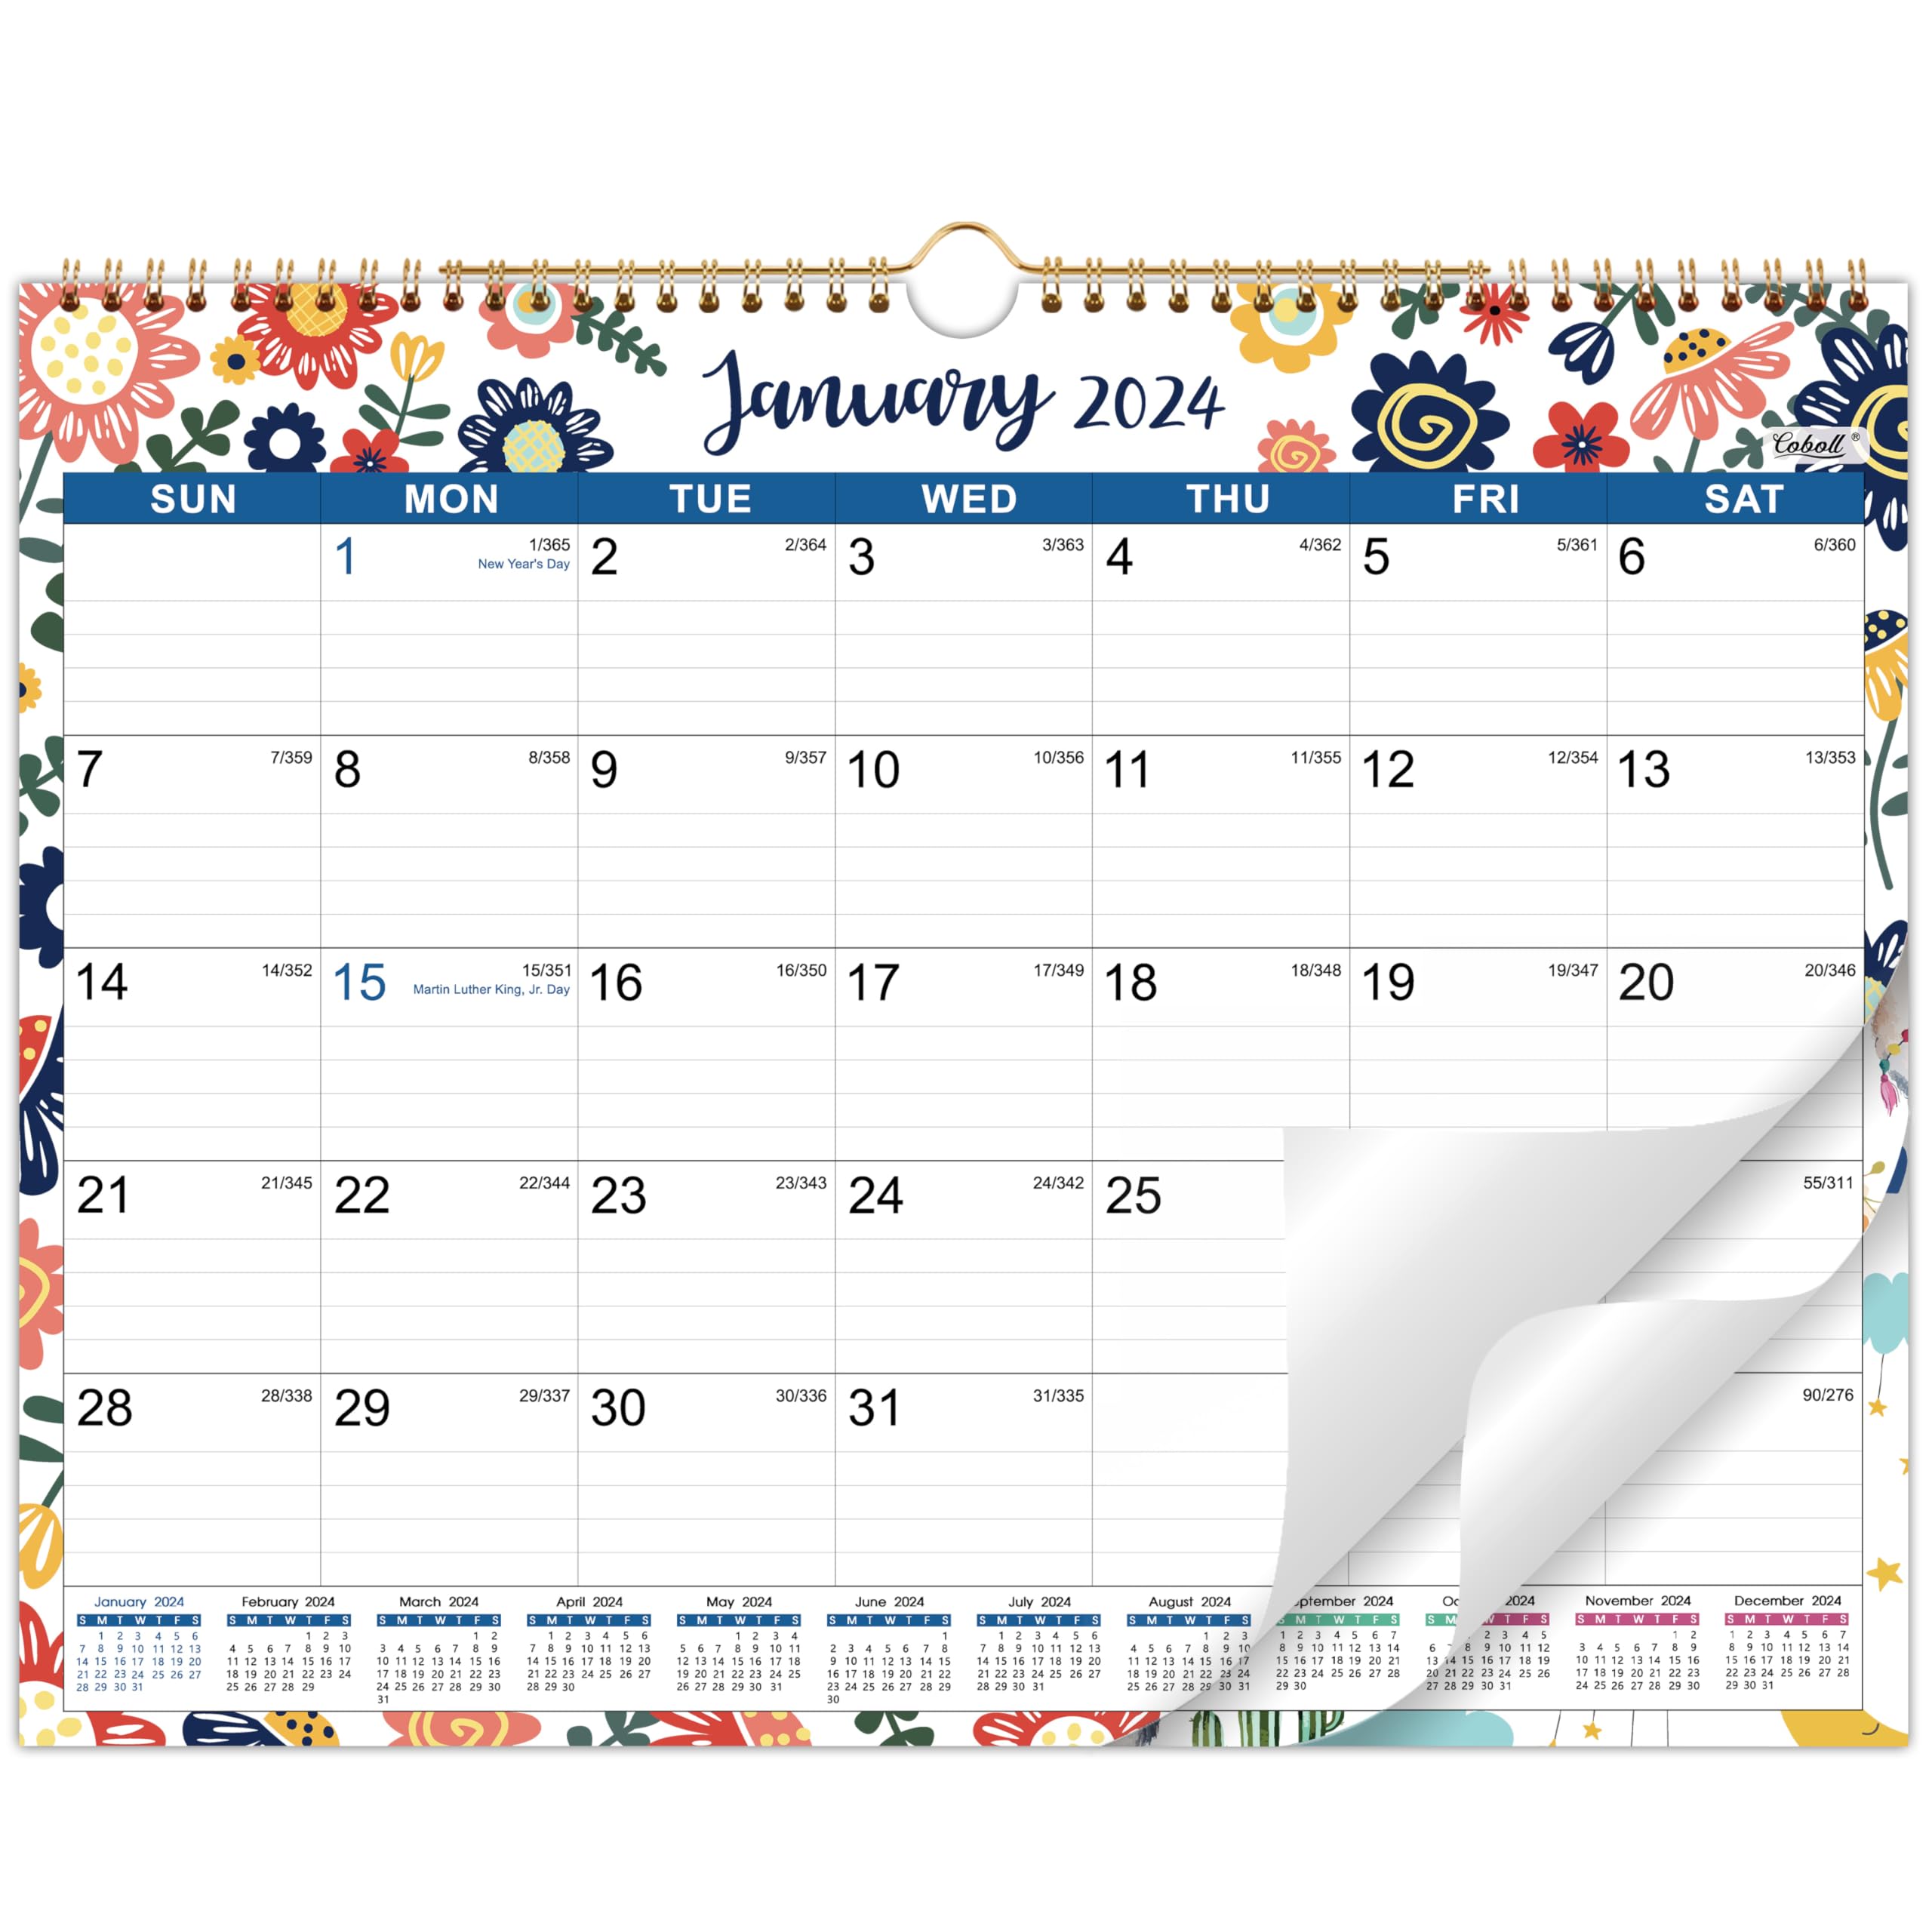 Calendar or date planner.